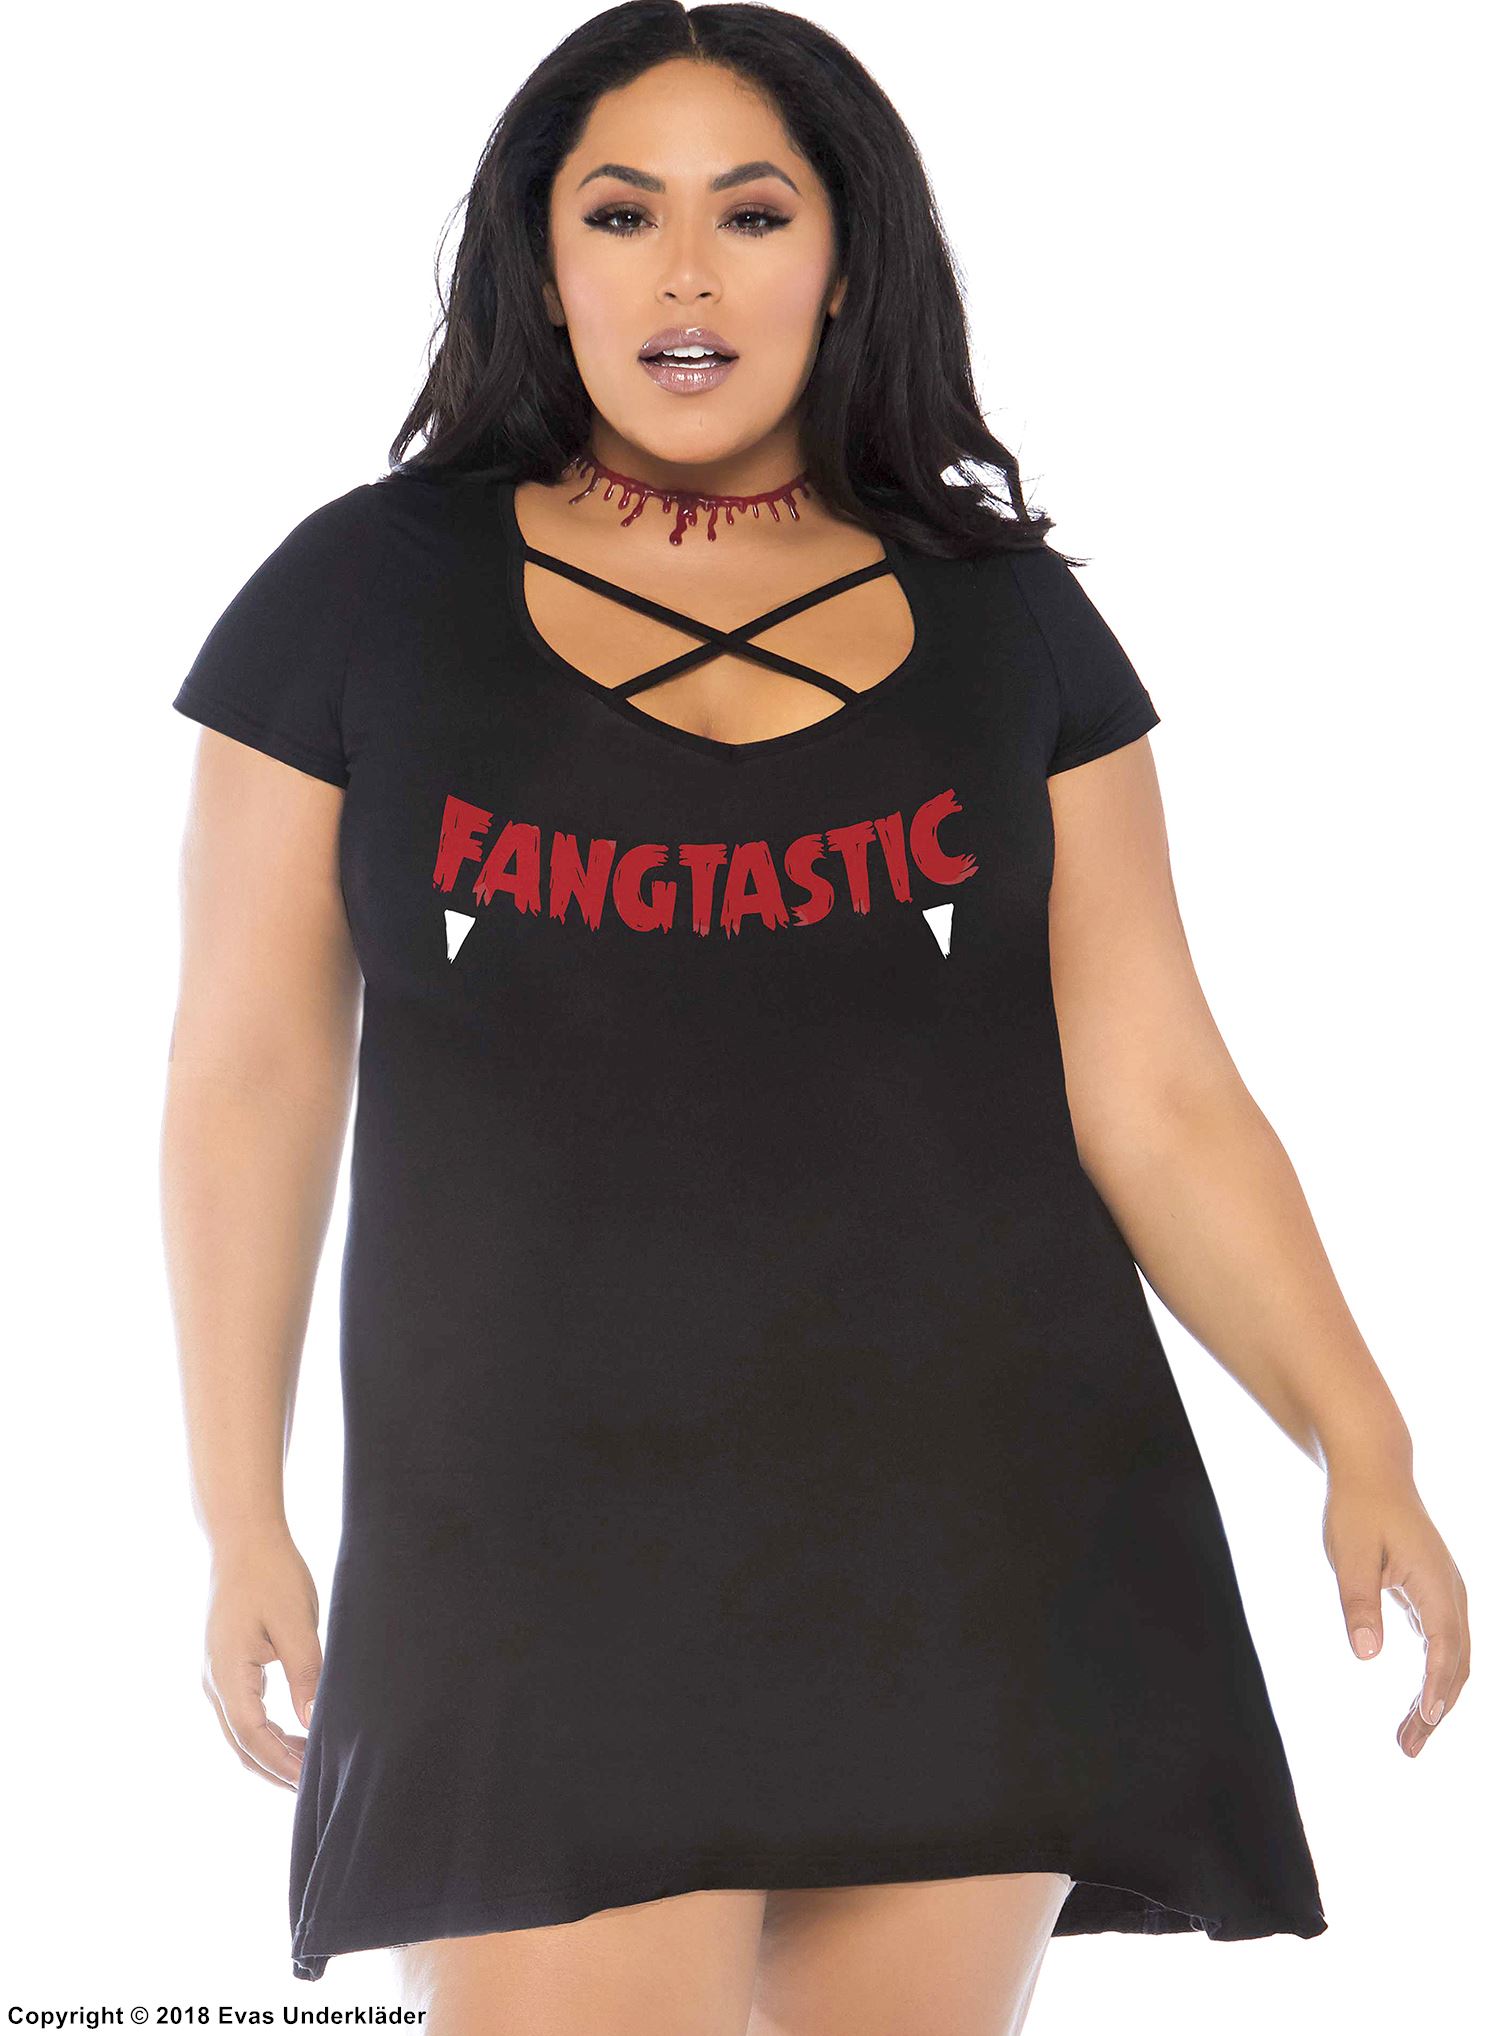 Vampire, costume dress, crossing straps, short sleeves, plain back, XL to 4XL